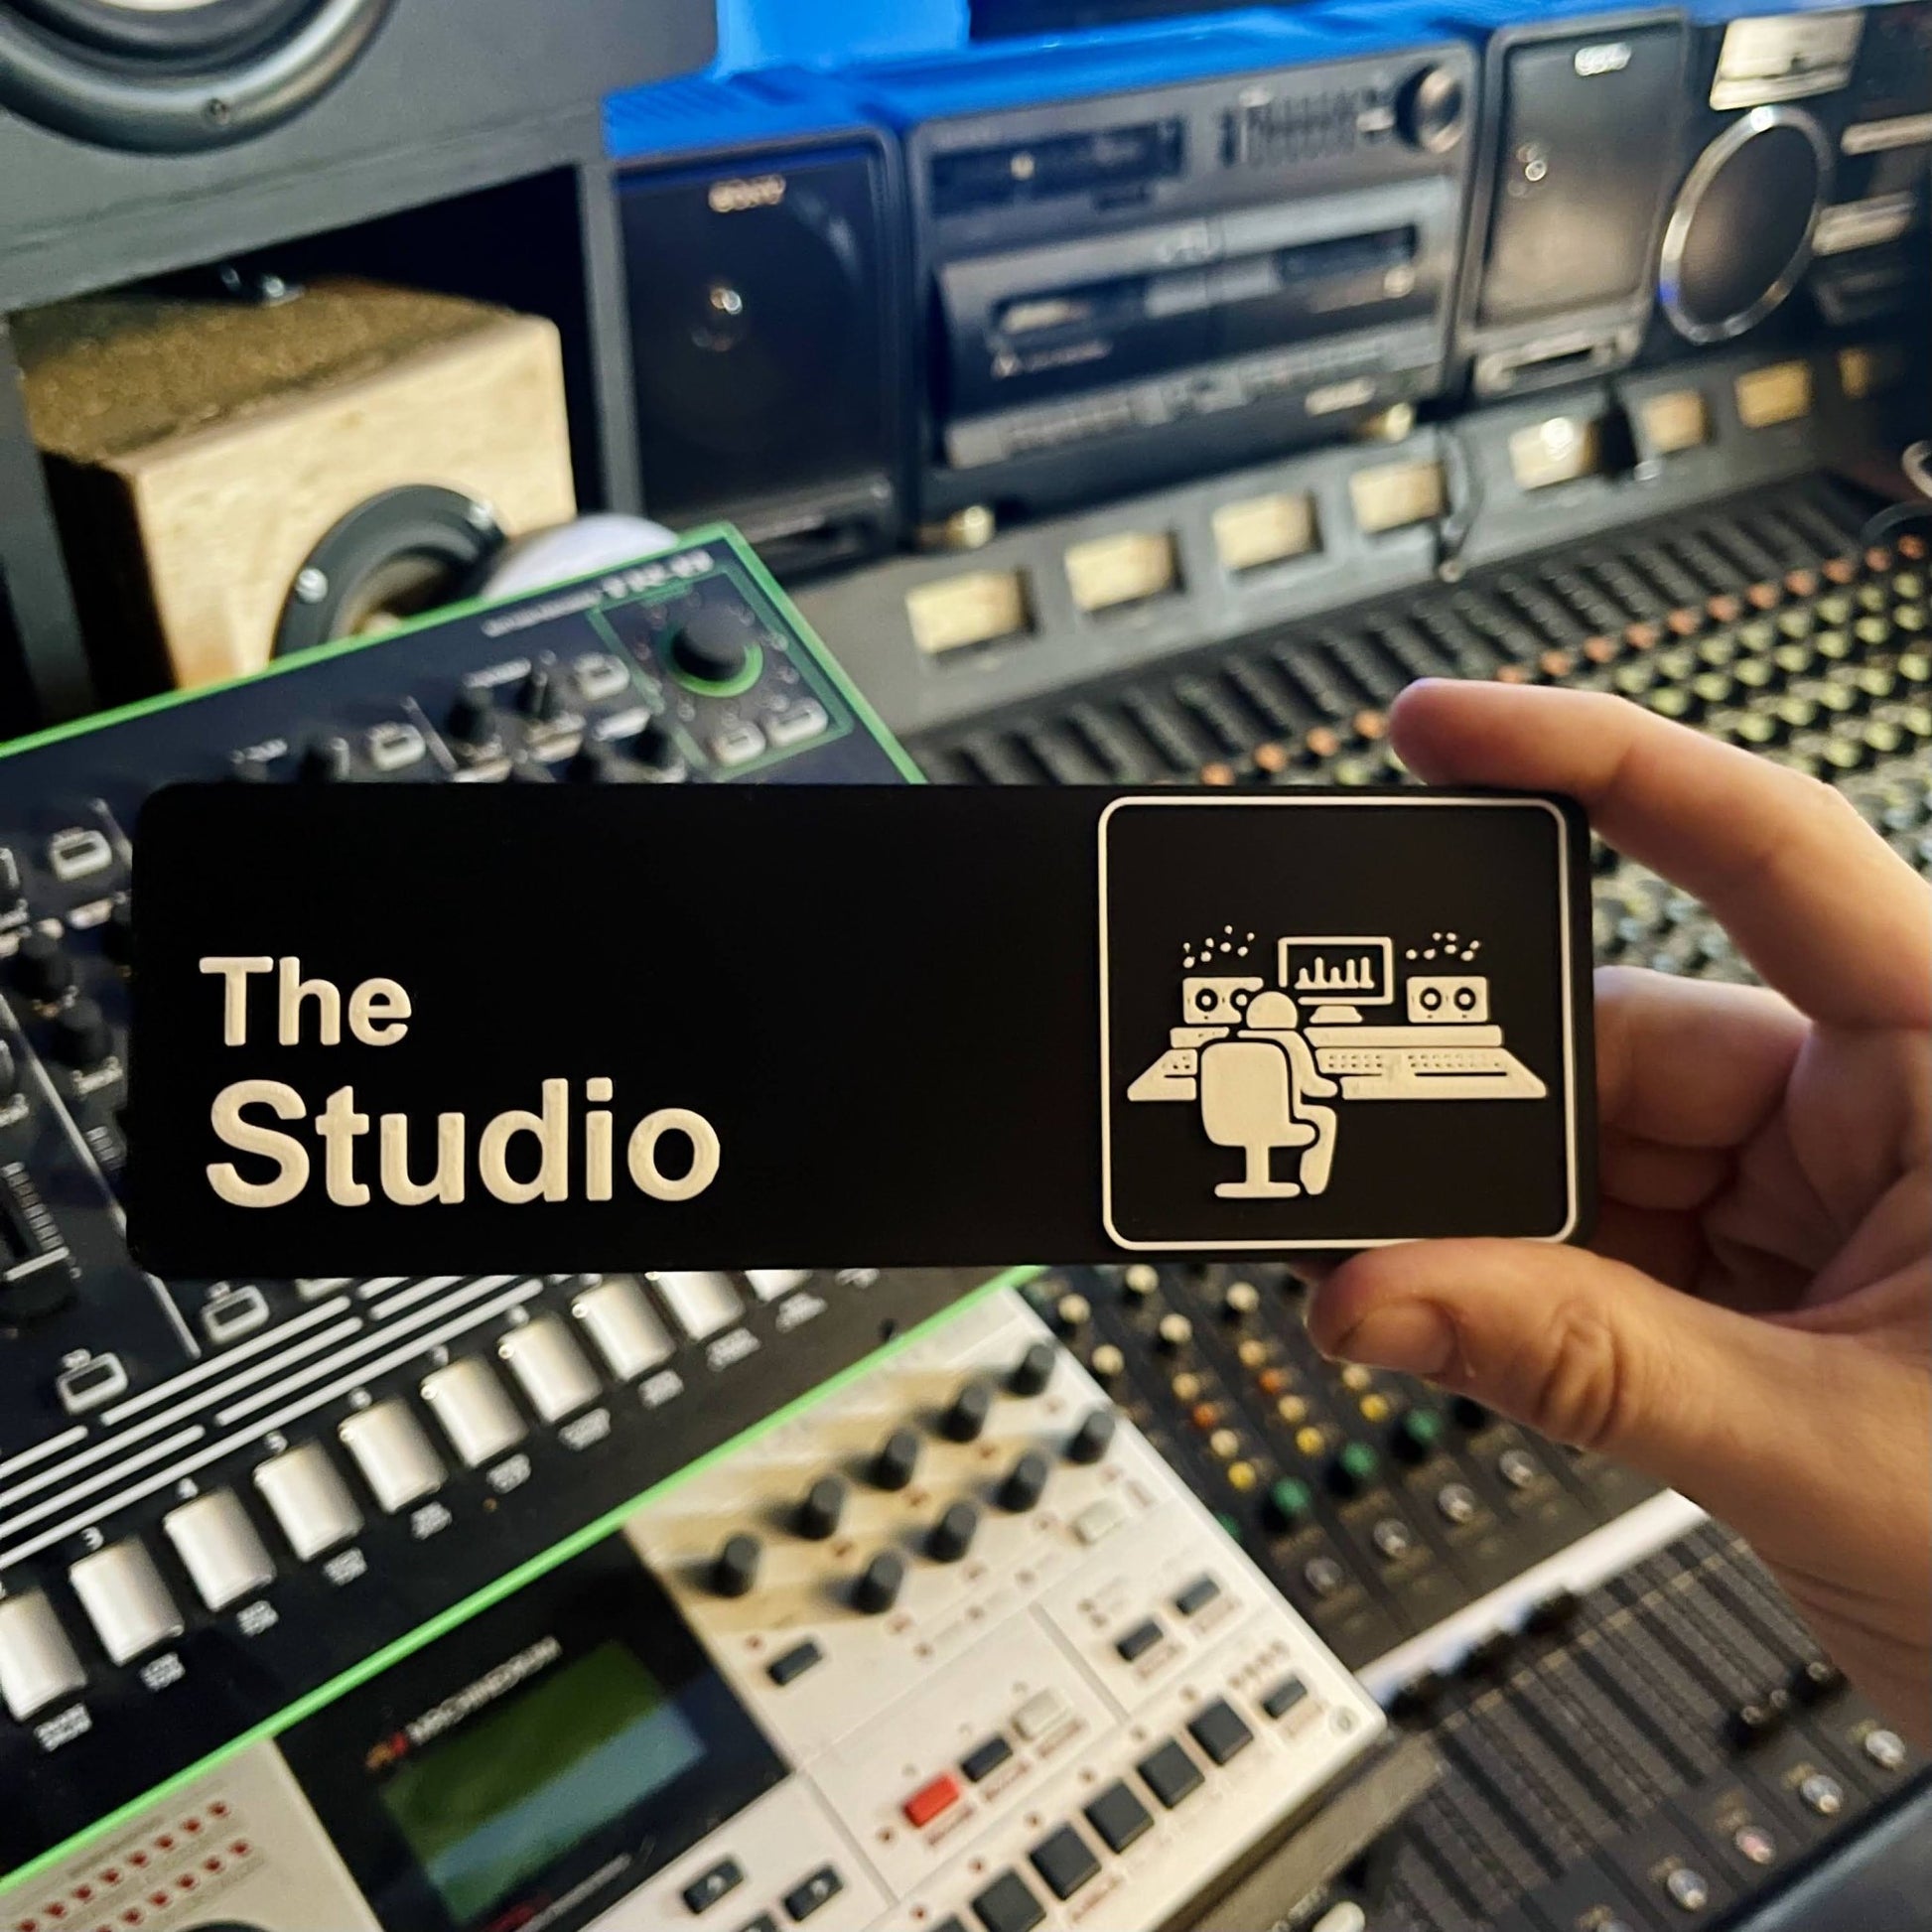 The Studio Sign - The Chris Alan Designs